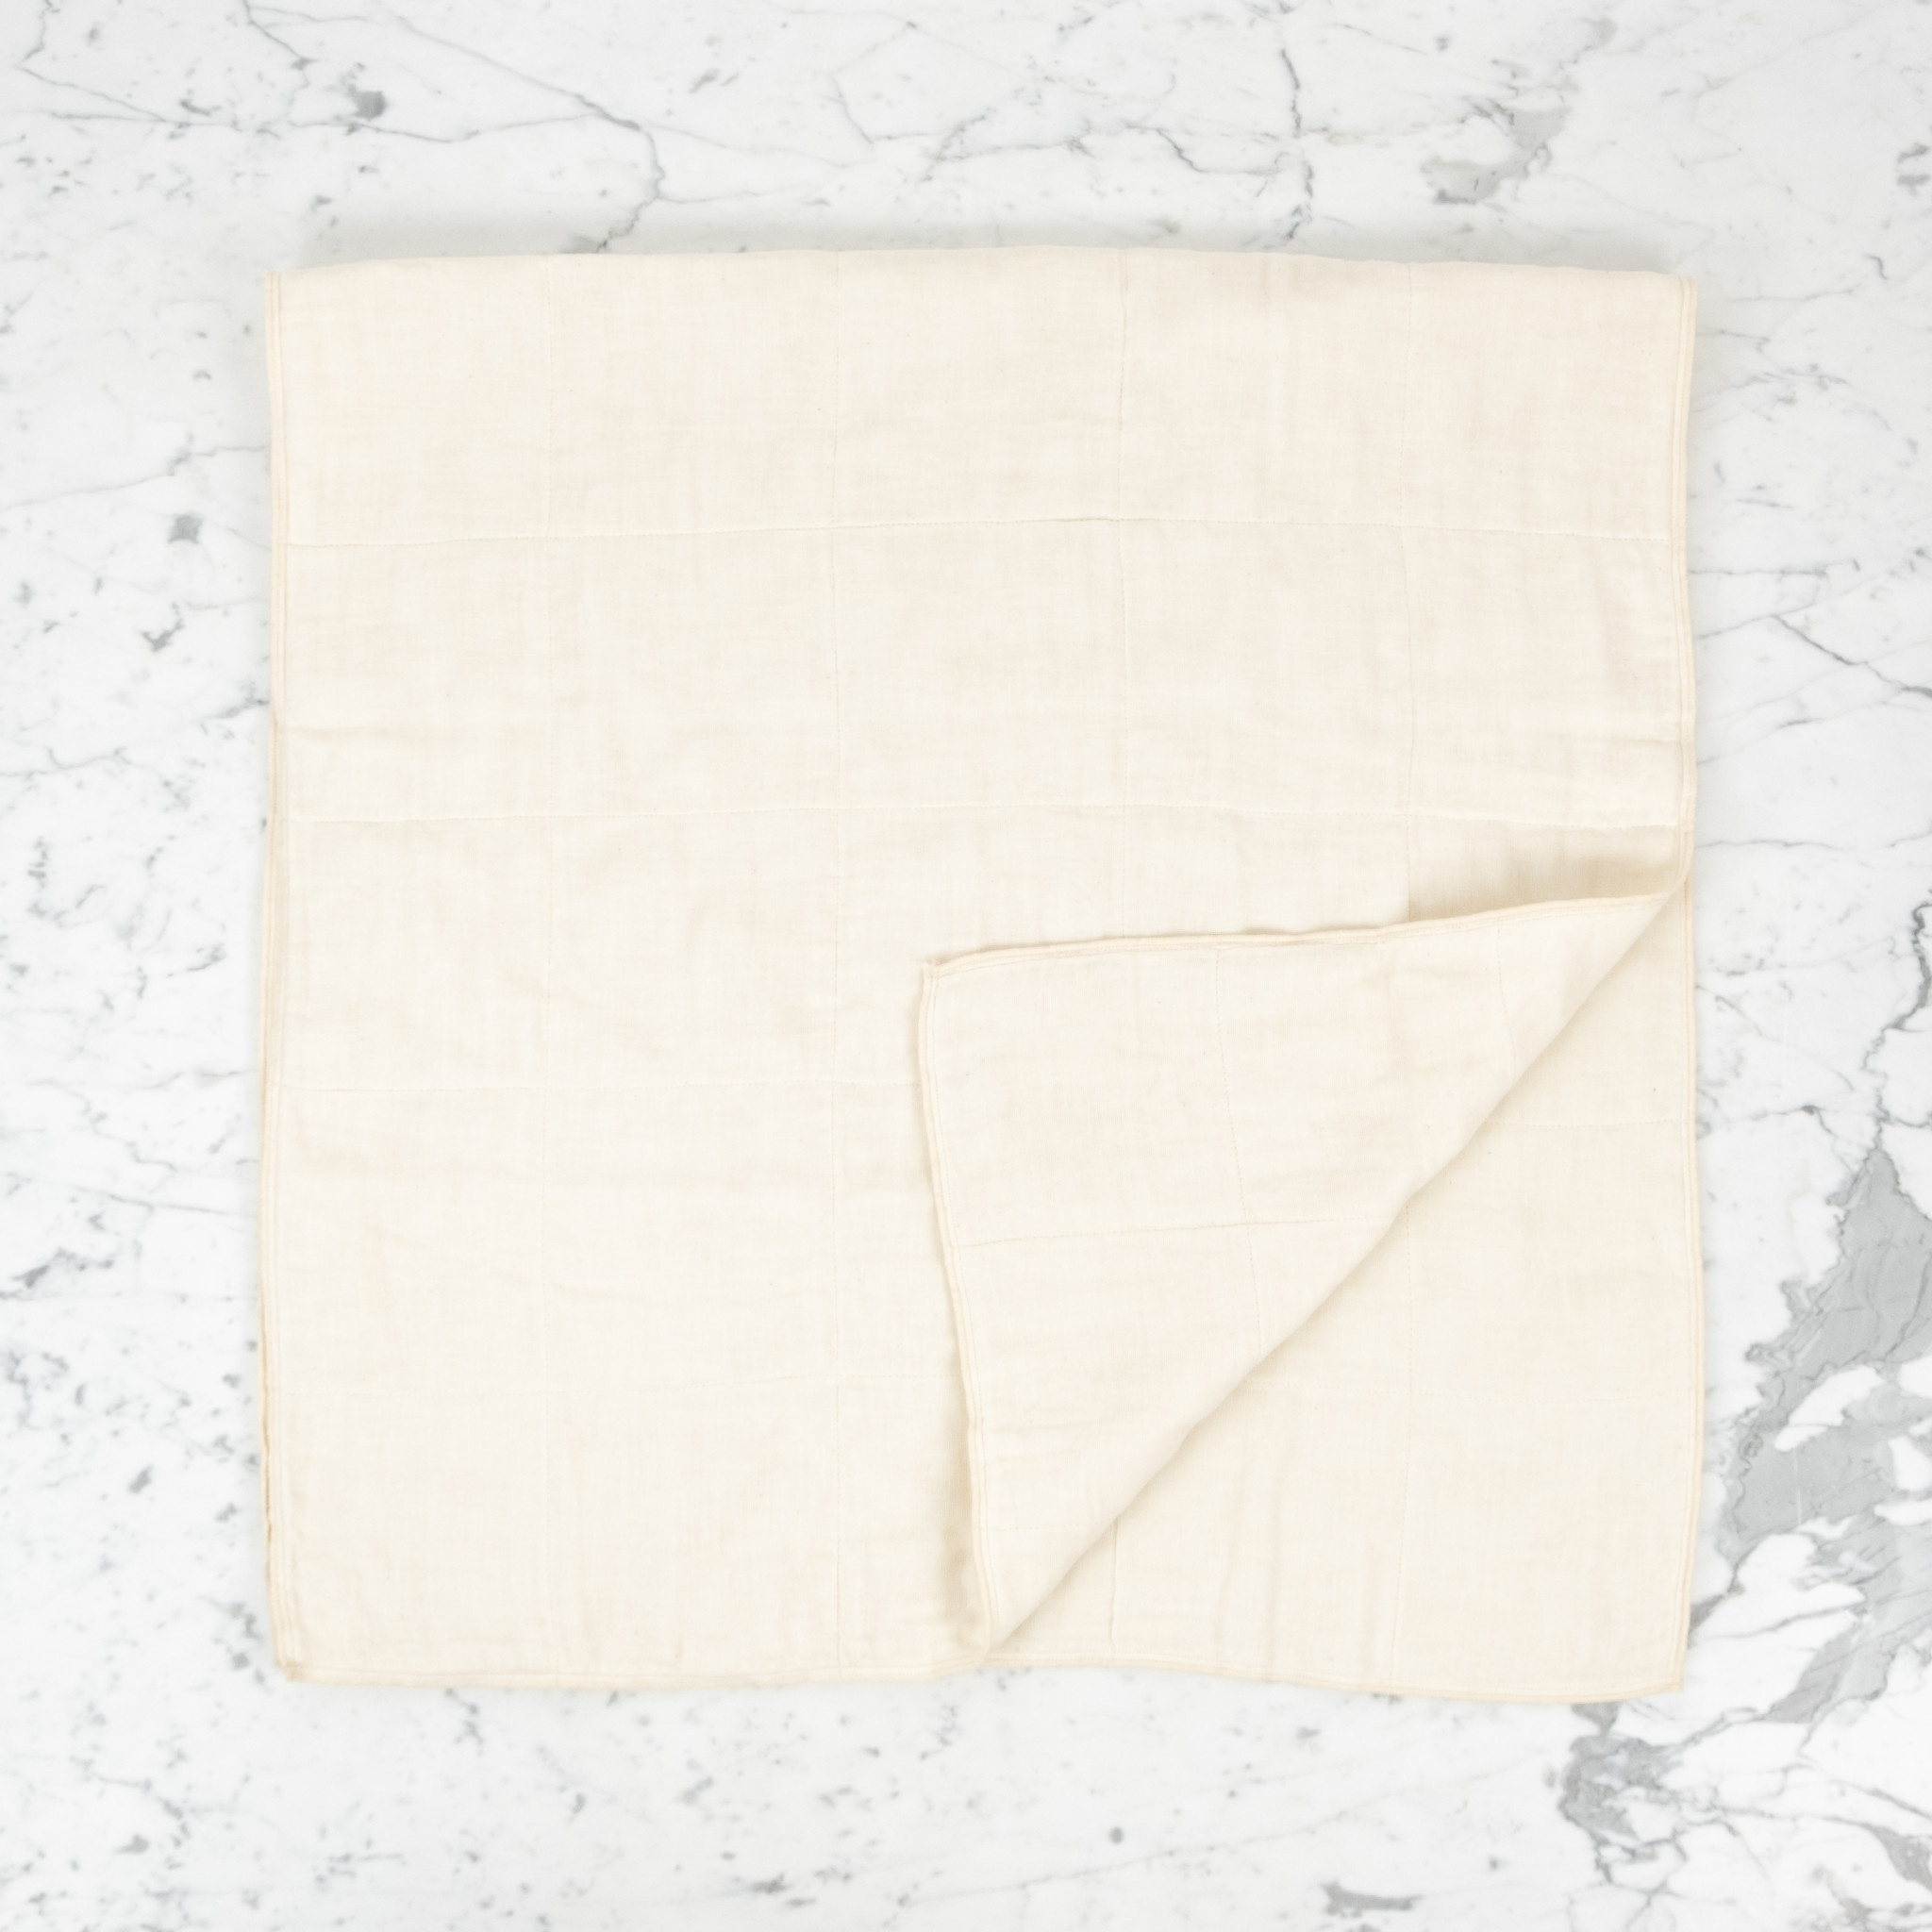 Japanese Organic 6 Layer Cotton Gauze Bath Towel - Ivory - 50" x 25"